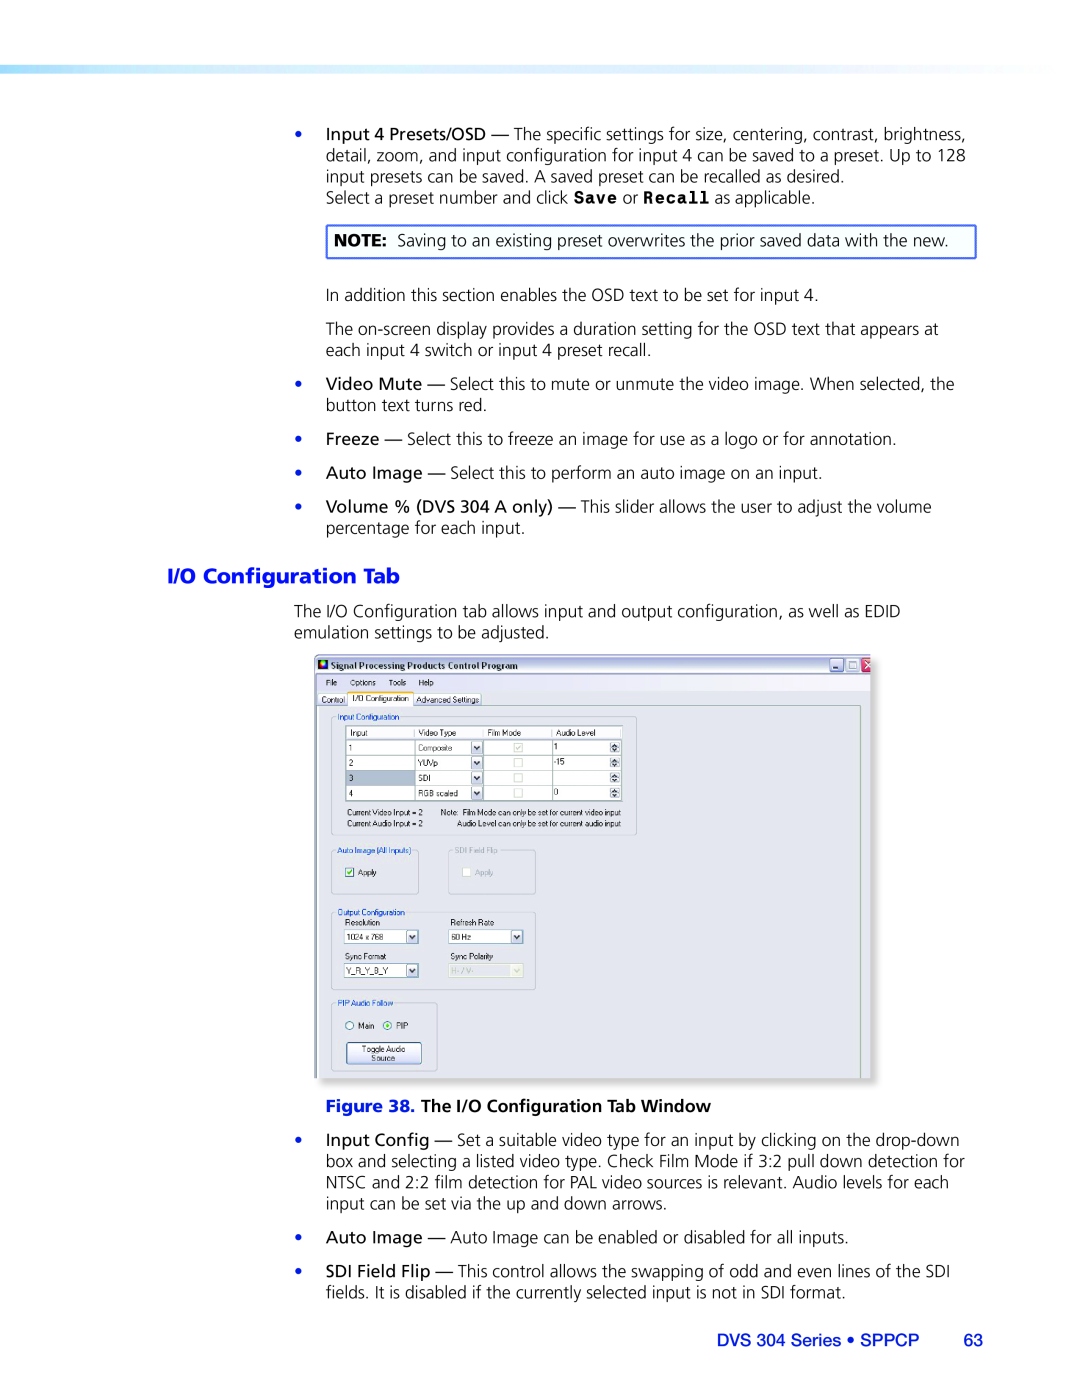 Extron electronic manual The I/O Configuration Tab Window, DVS 304 Series SPPCP 